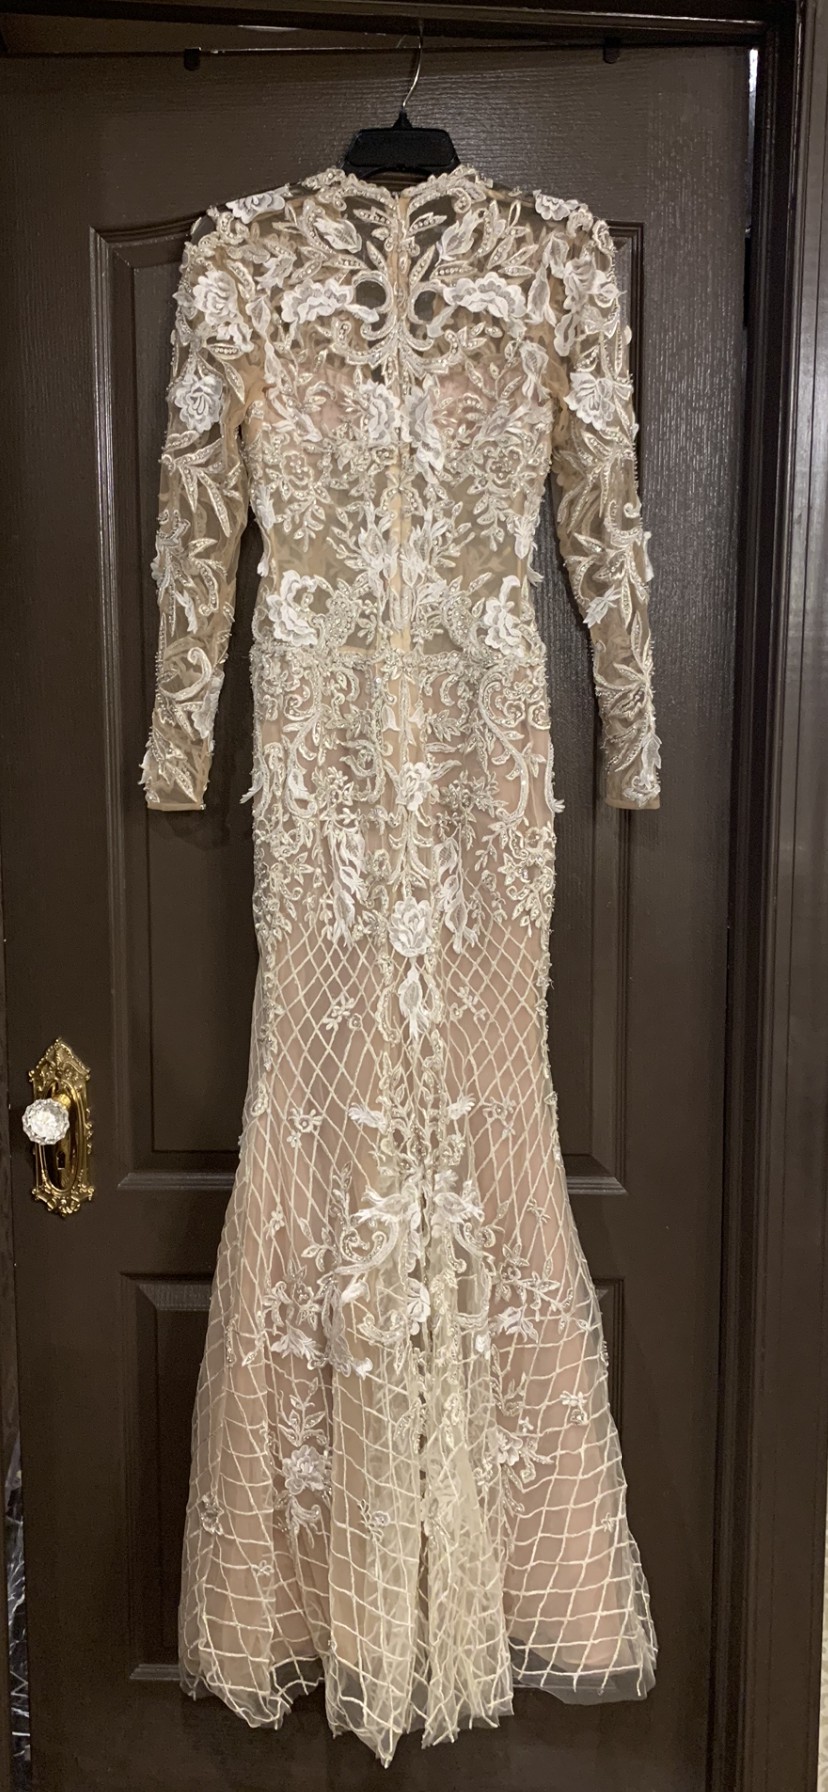 Stephen Yearick Couture Second Hand Wedding Dress Save 56% - Stillwhite